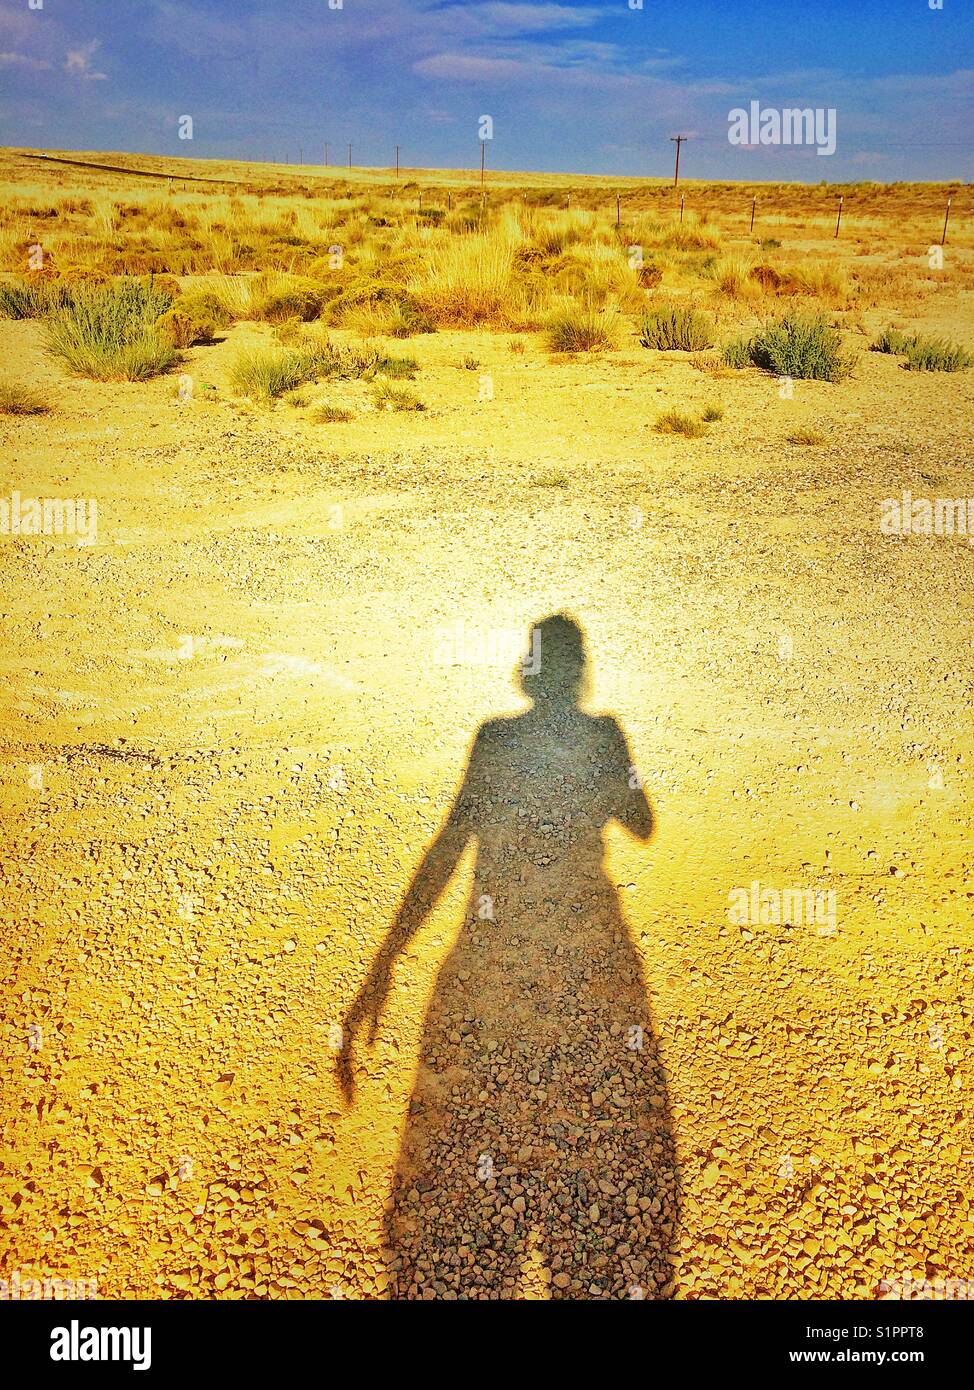 Self portrait shadowy at desert, Arizona, USA Stock Photo